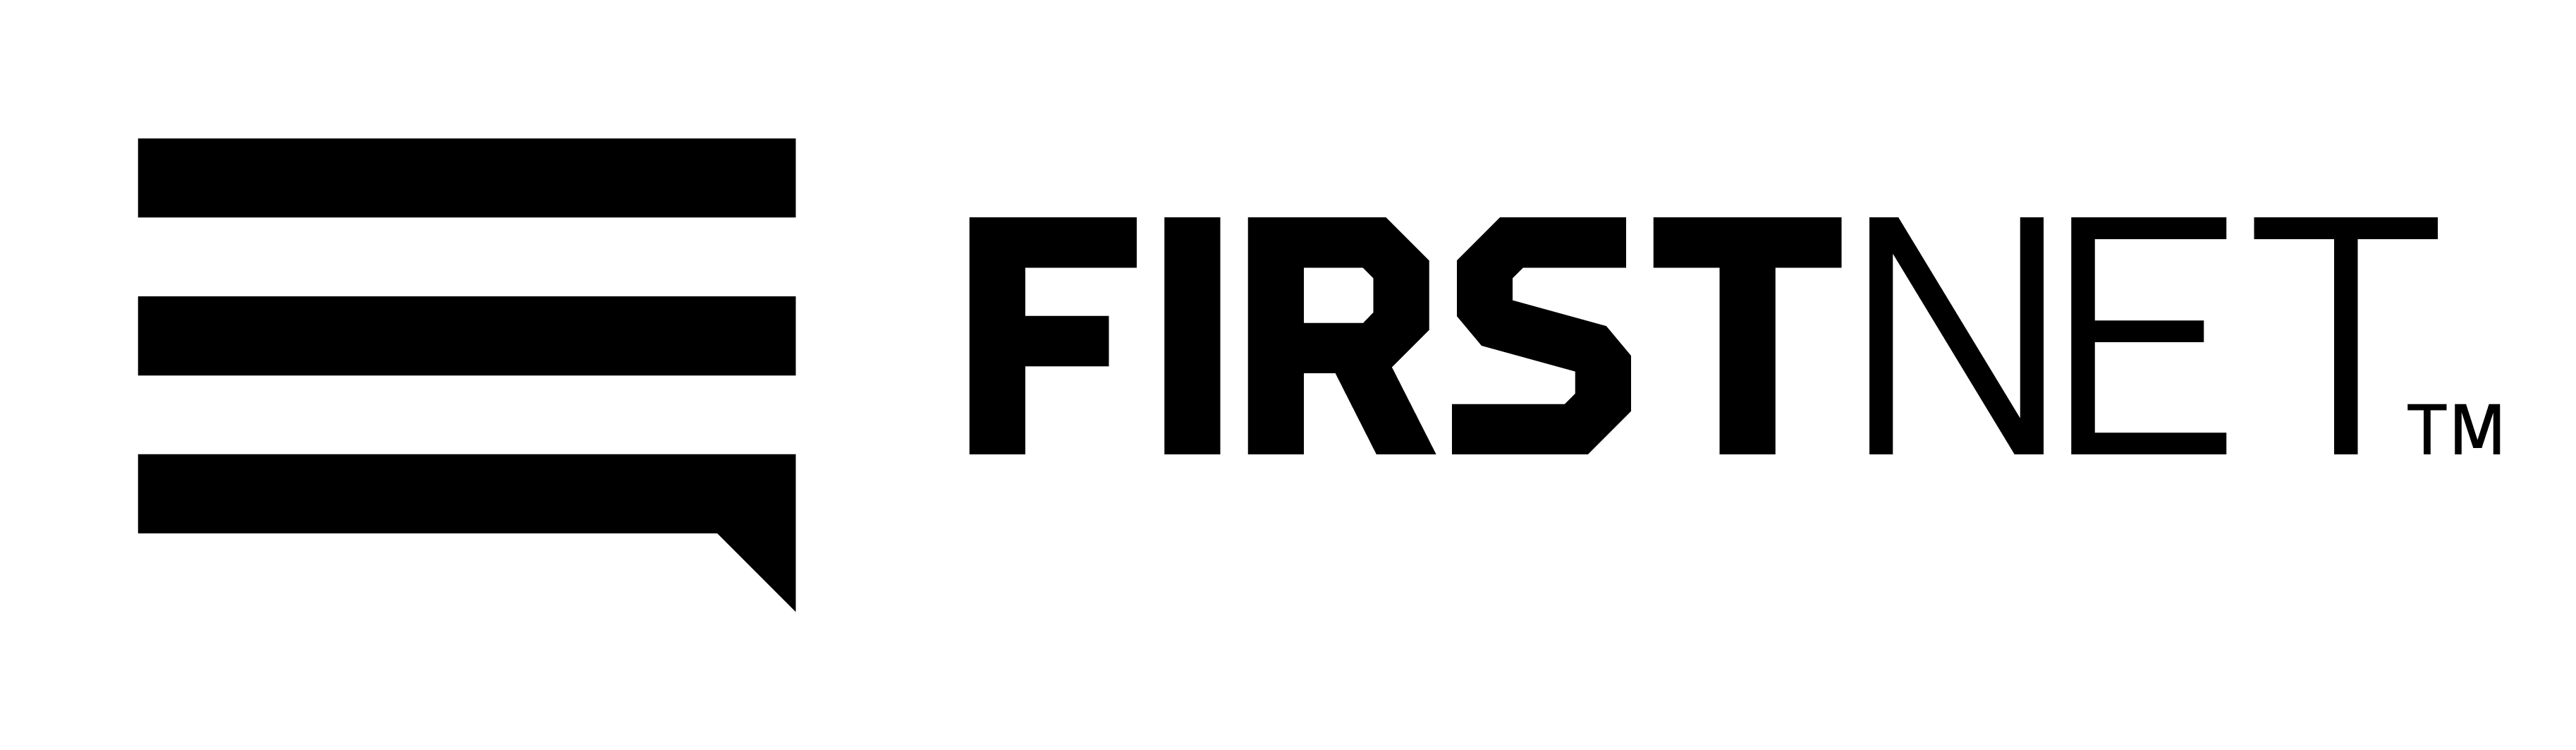 FirstNet Logo - FirstNet-Black | SceneDoc